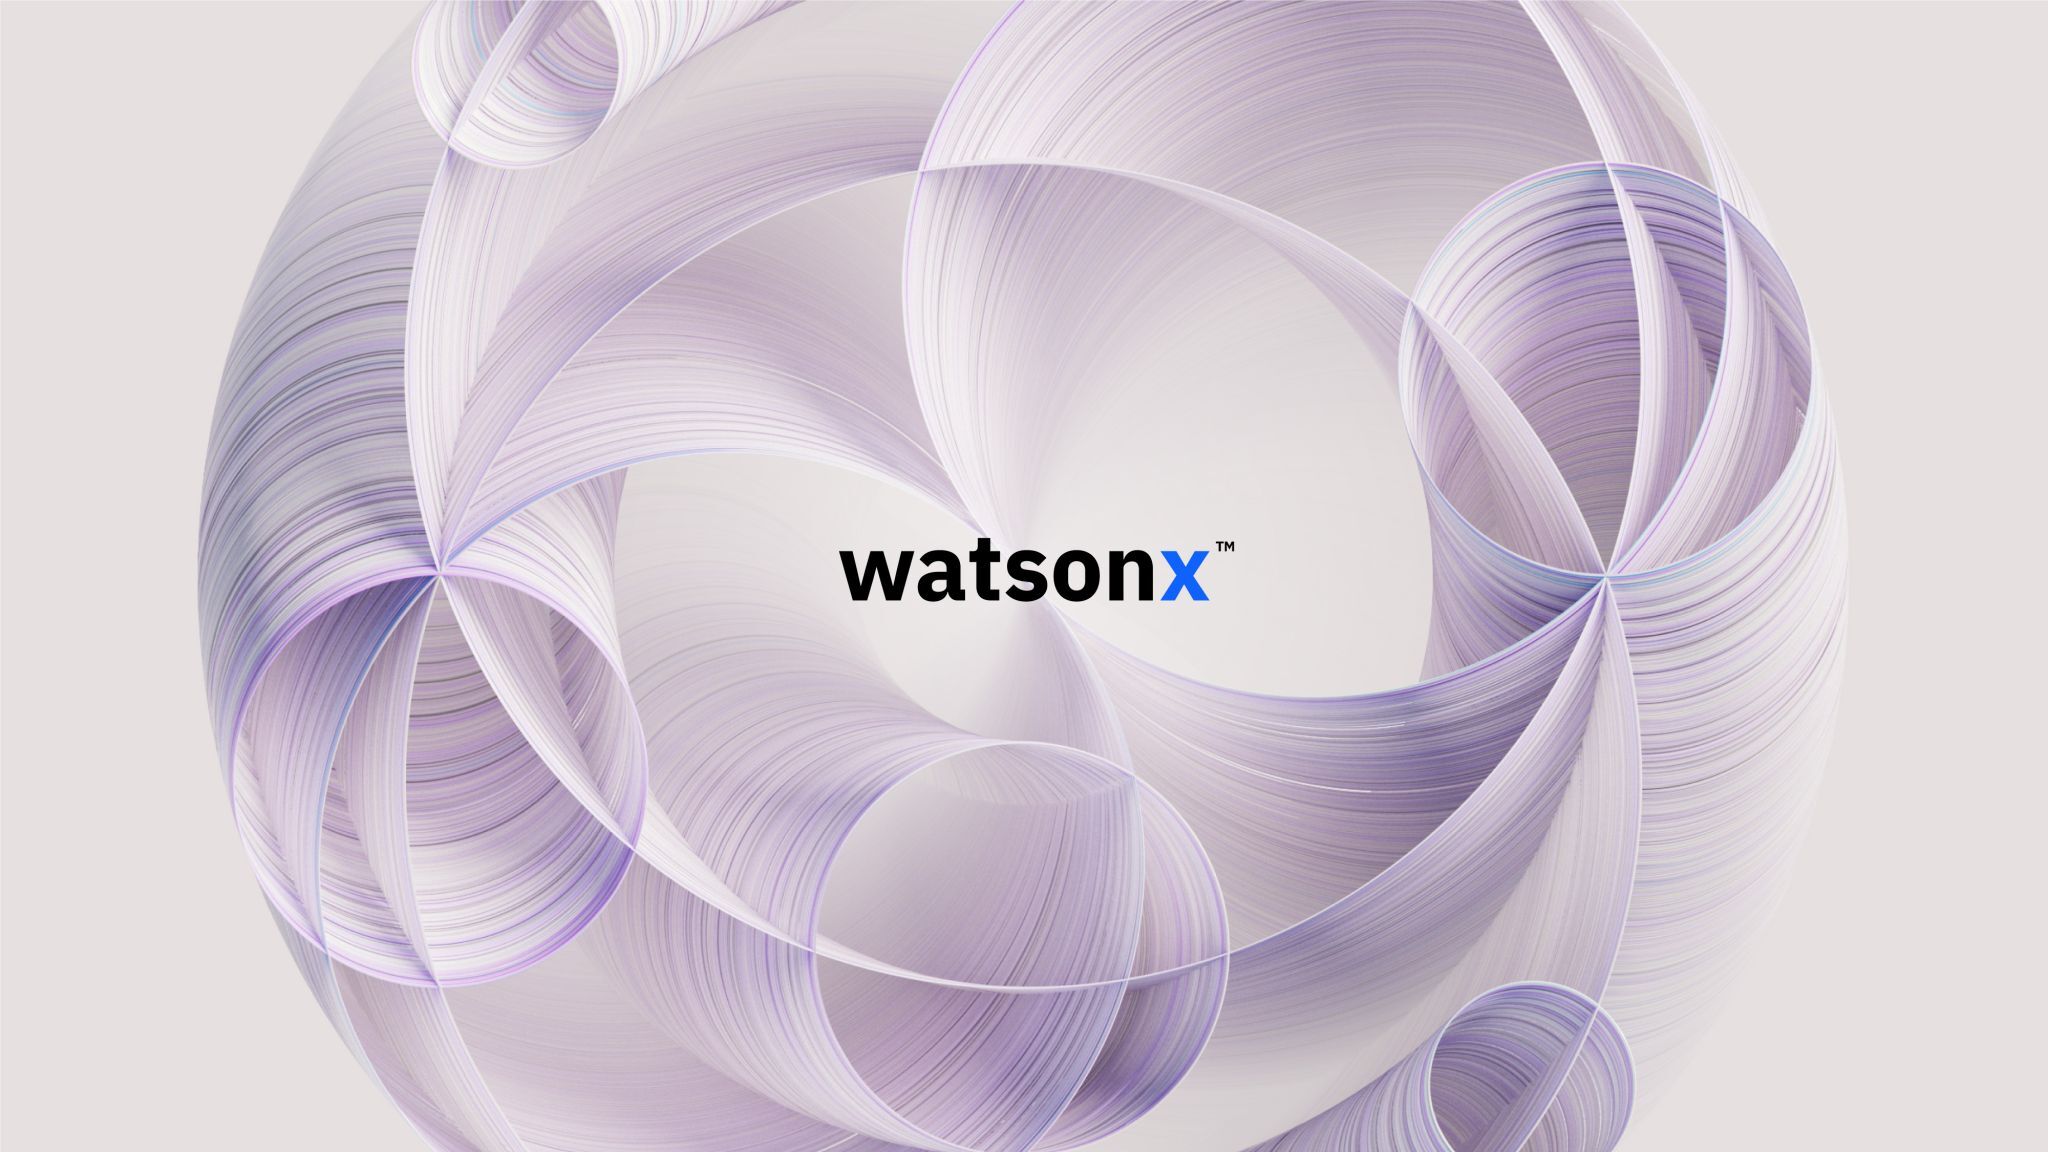 IBM Launches Watsonx To Power Next-Generation AI